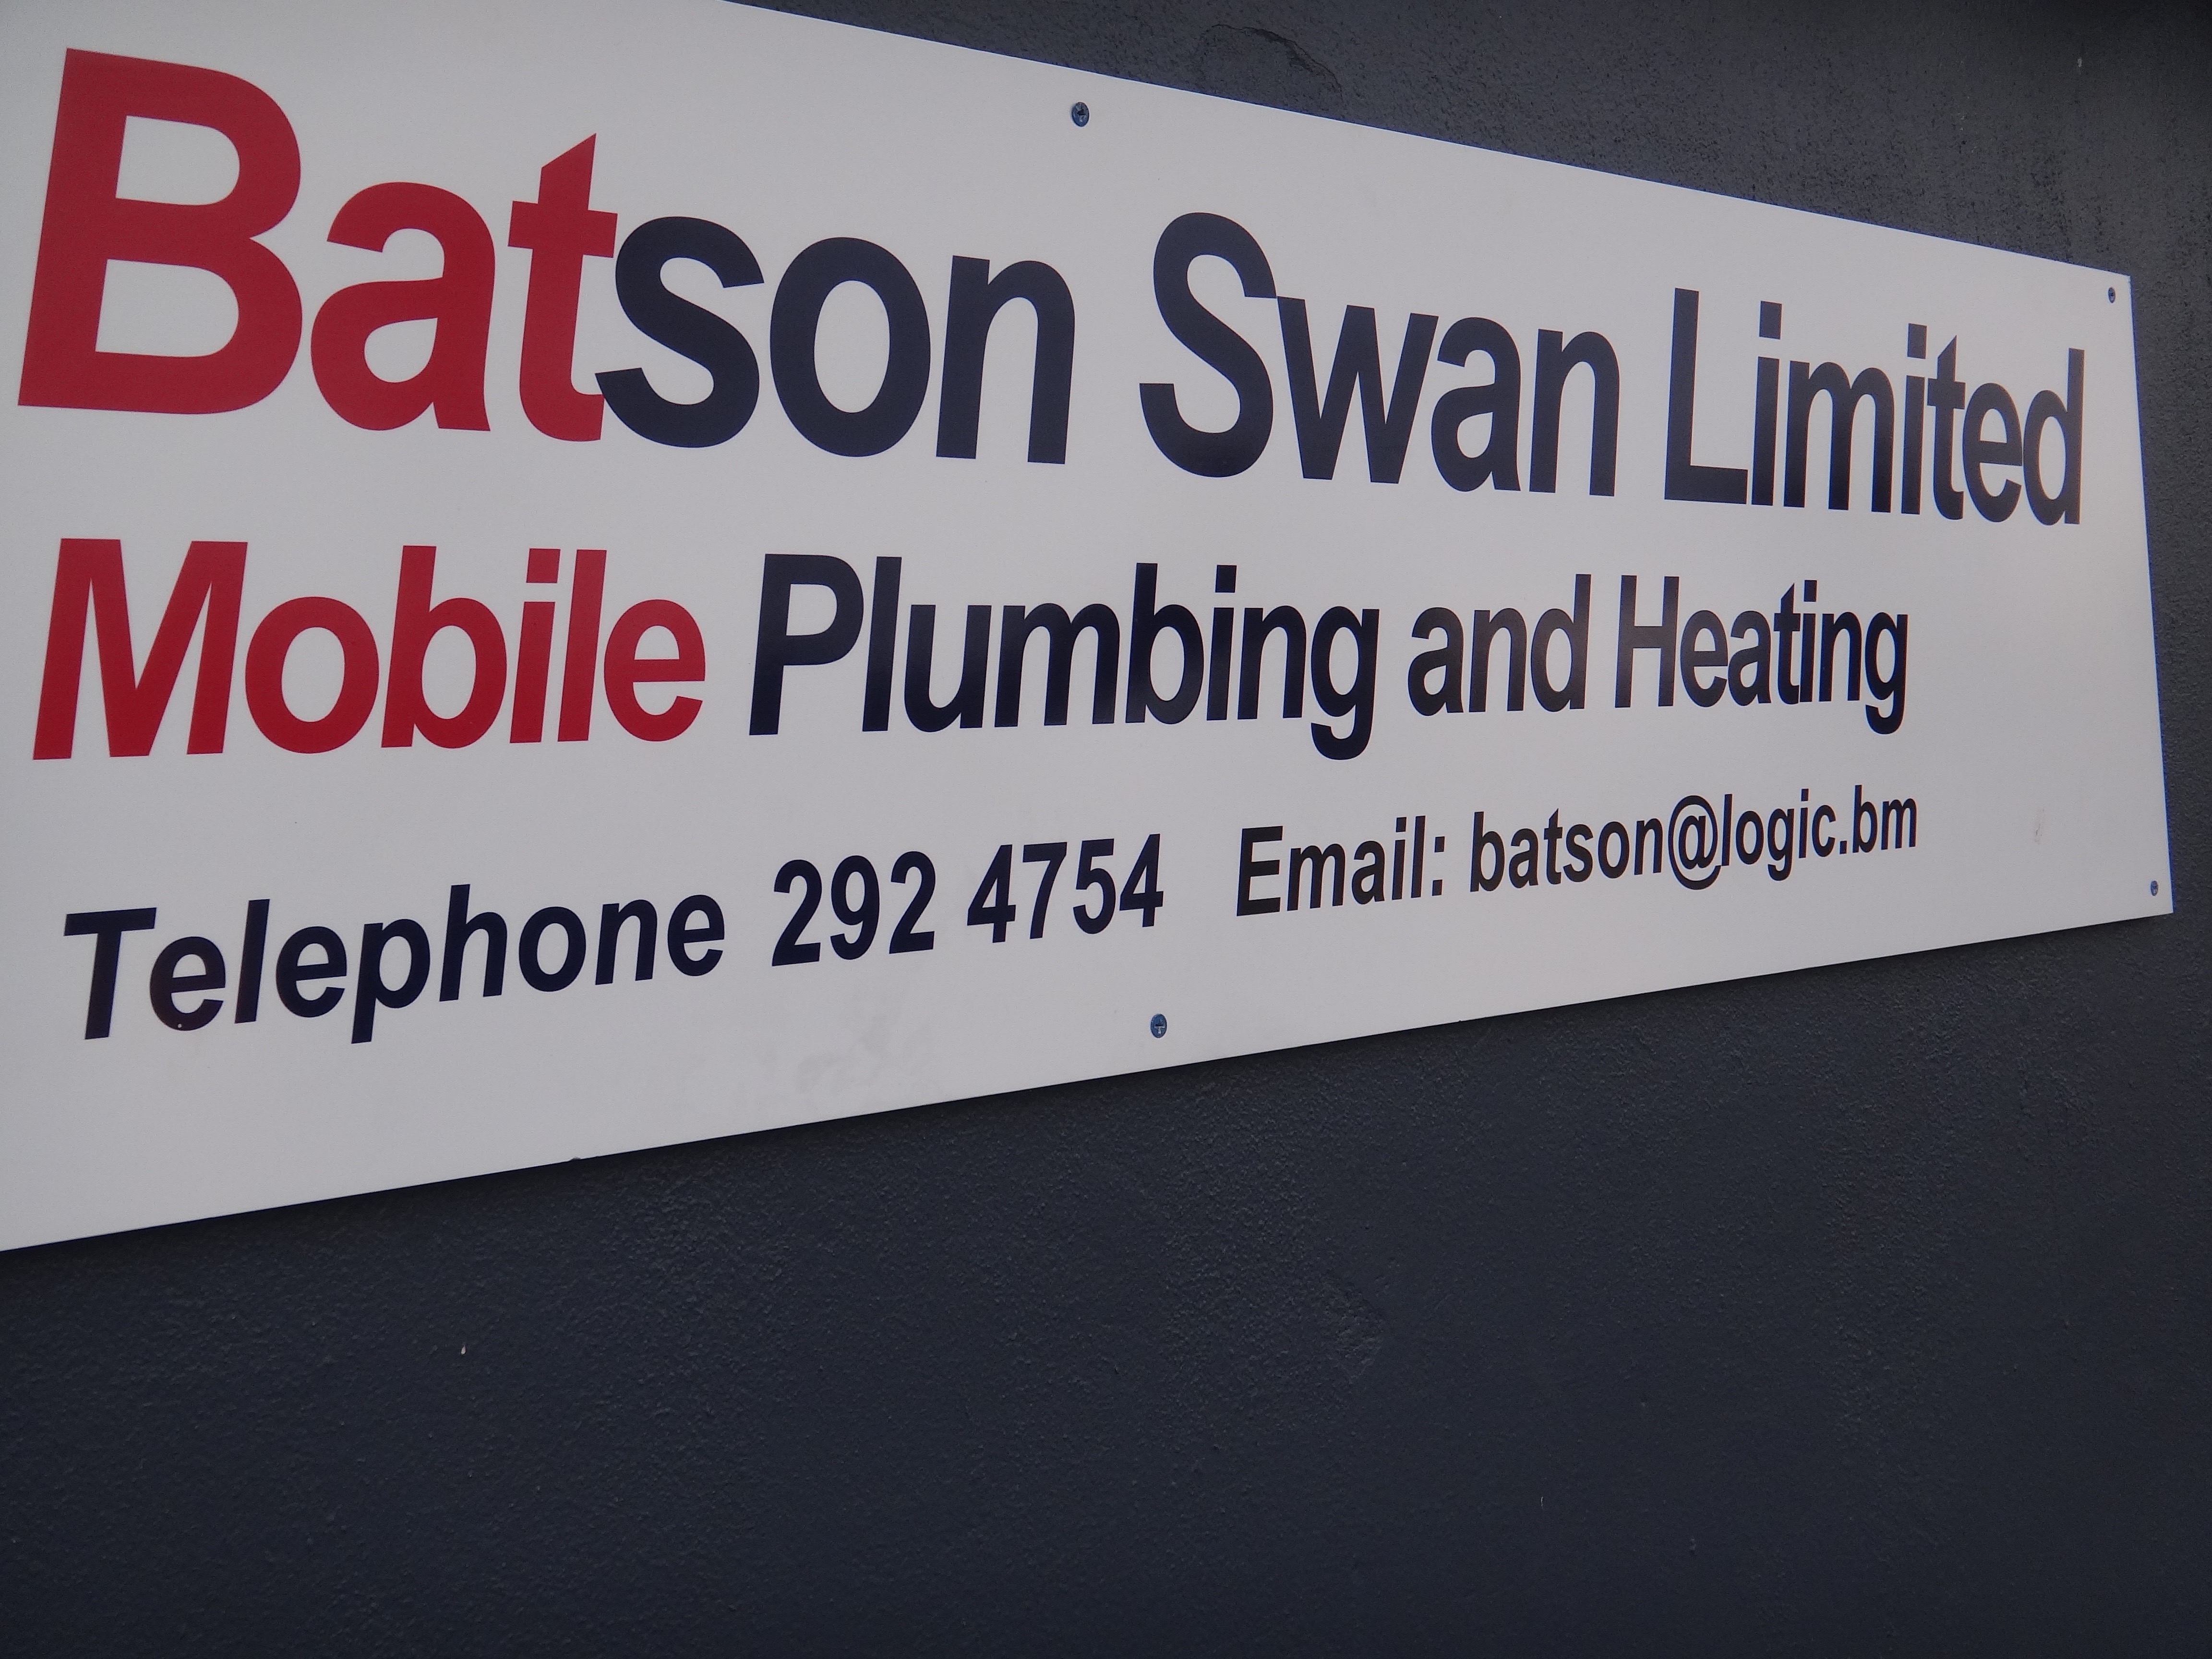 C.F. Batson Swan Ltd. - Mobile Plumbing & Heating